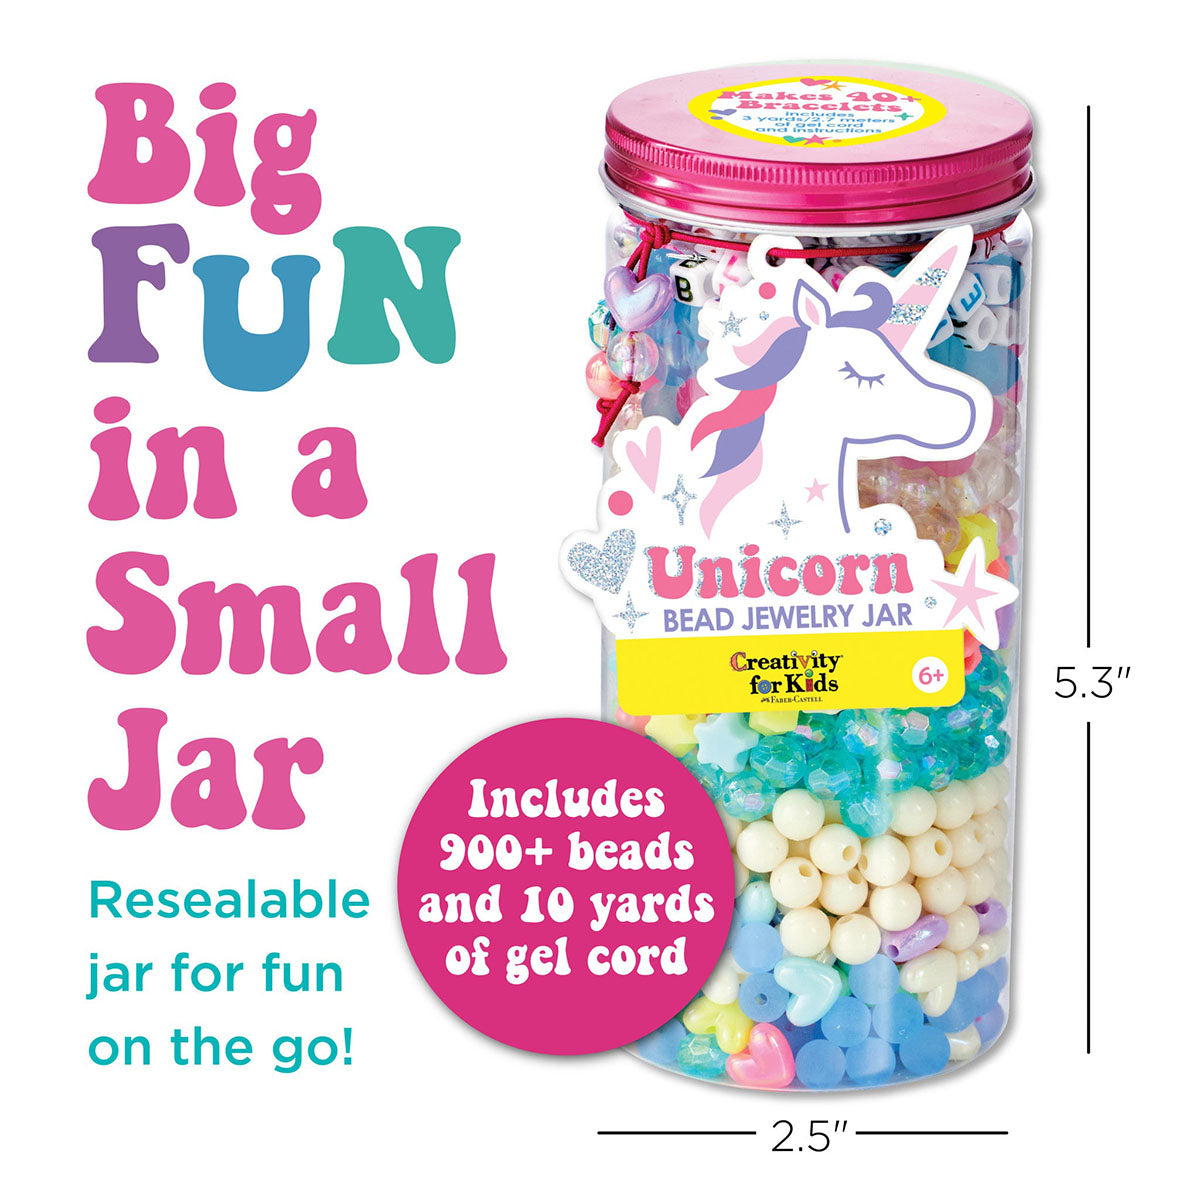 Big fun in a small jar! Unicorn Bead Jewelry by Creativity for Kids.